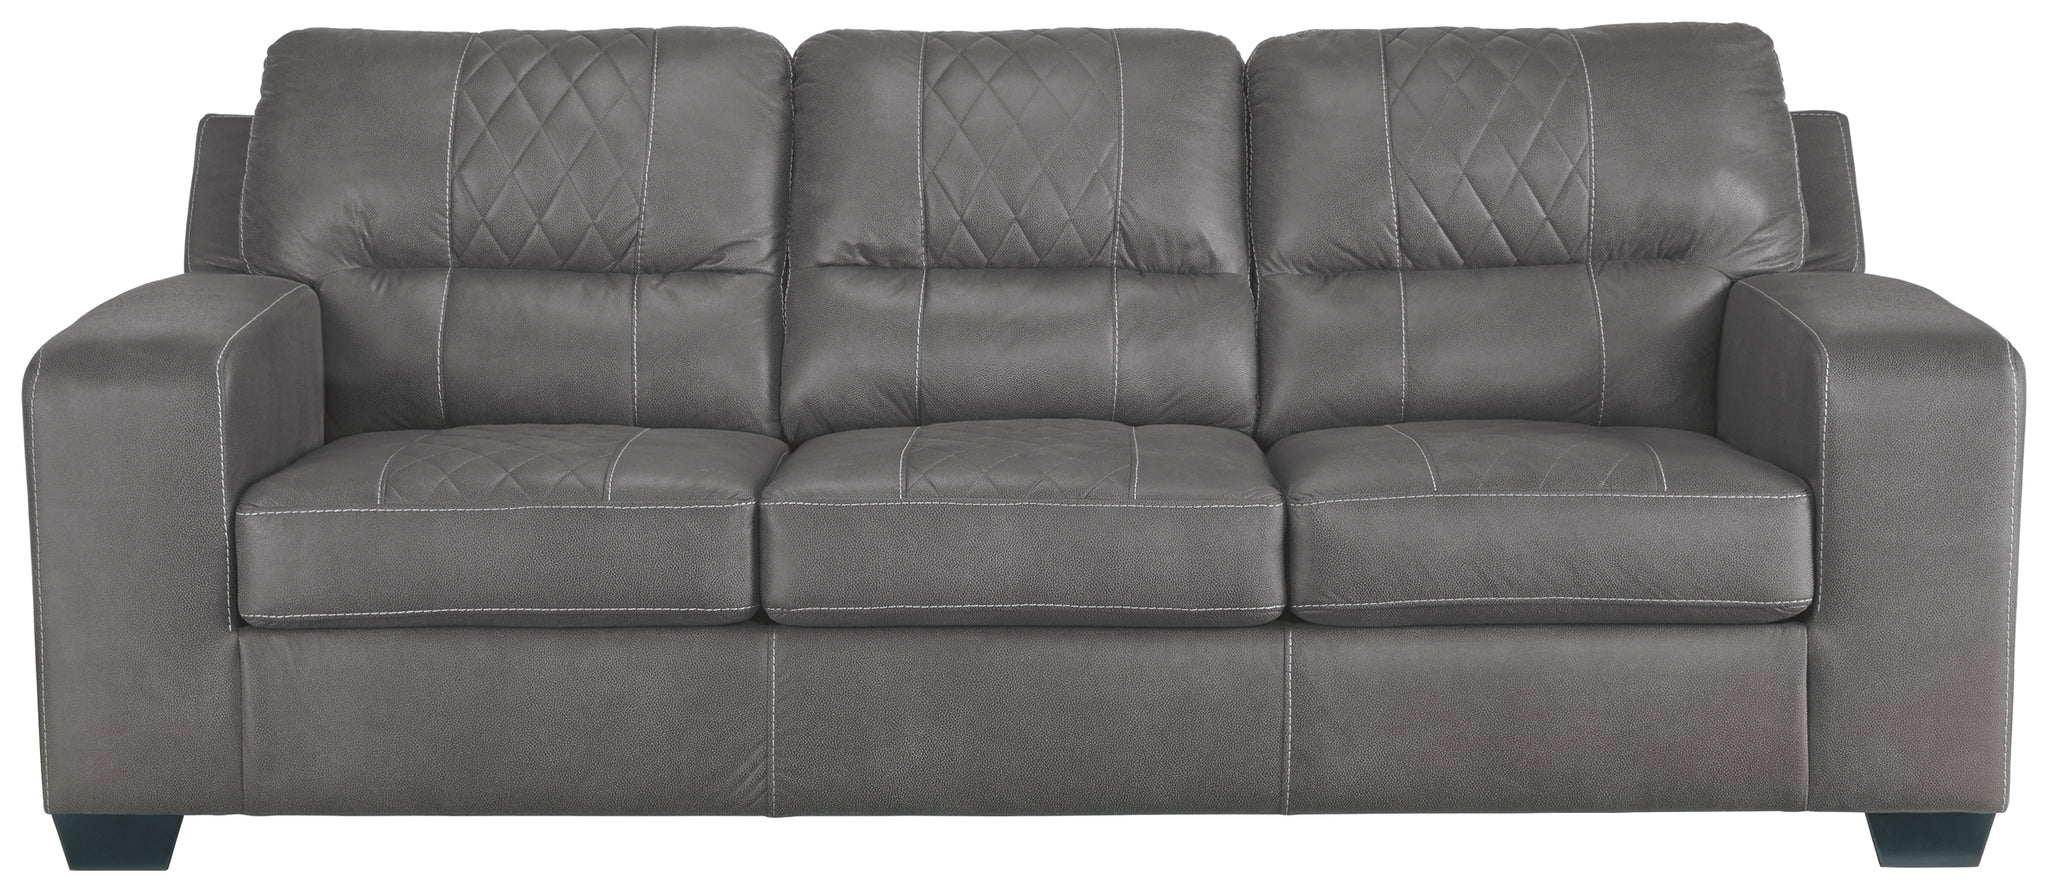 Narzole Benchcraft Sofa